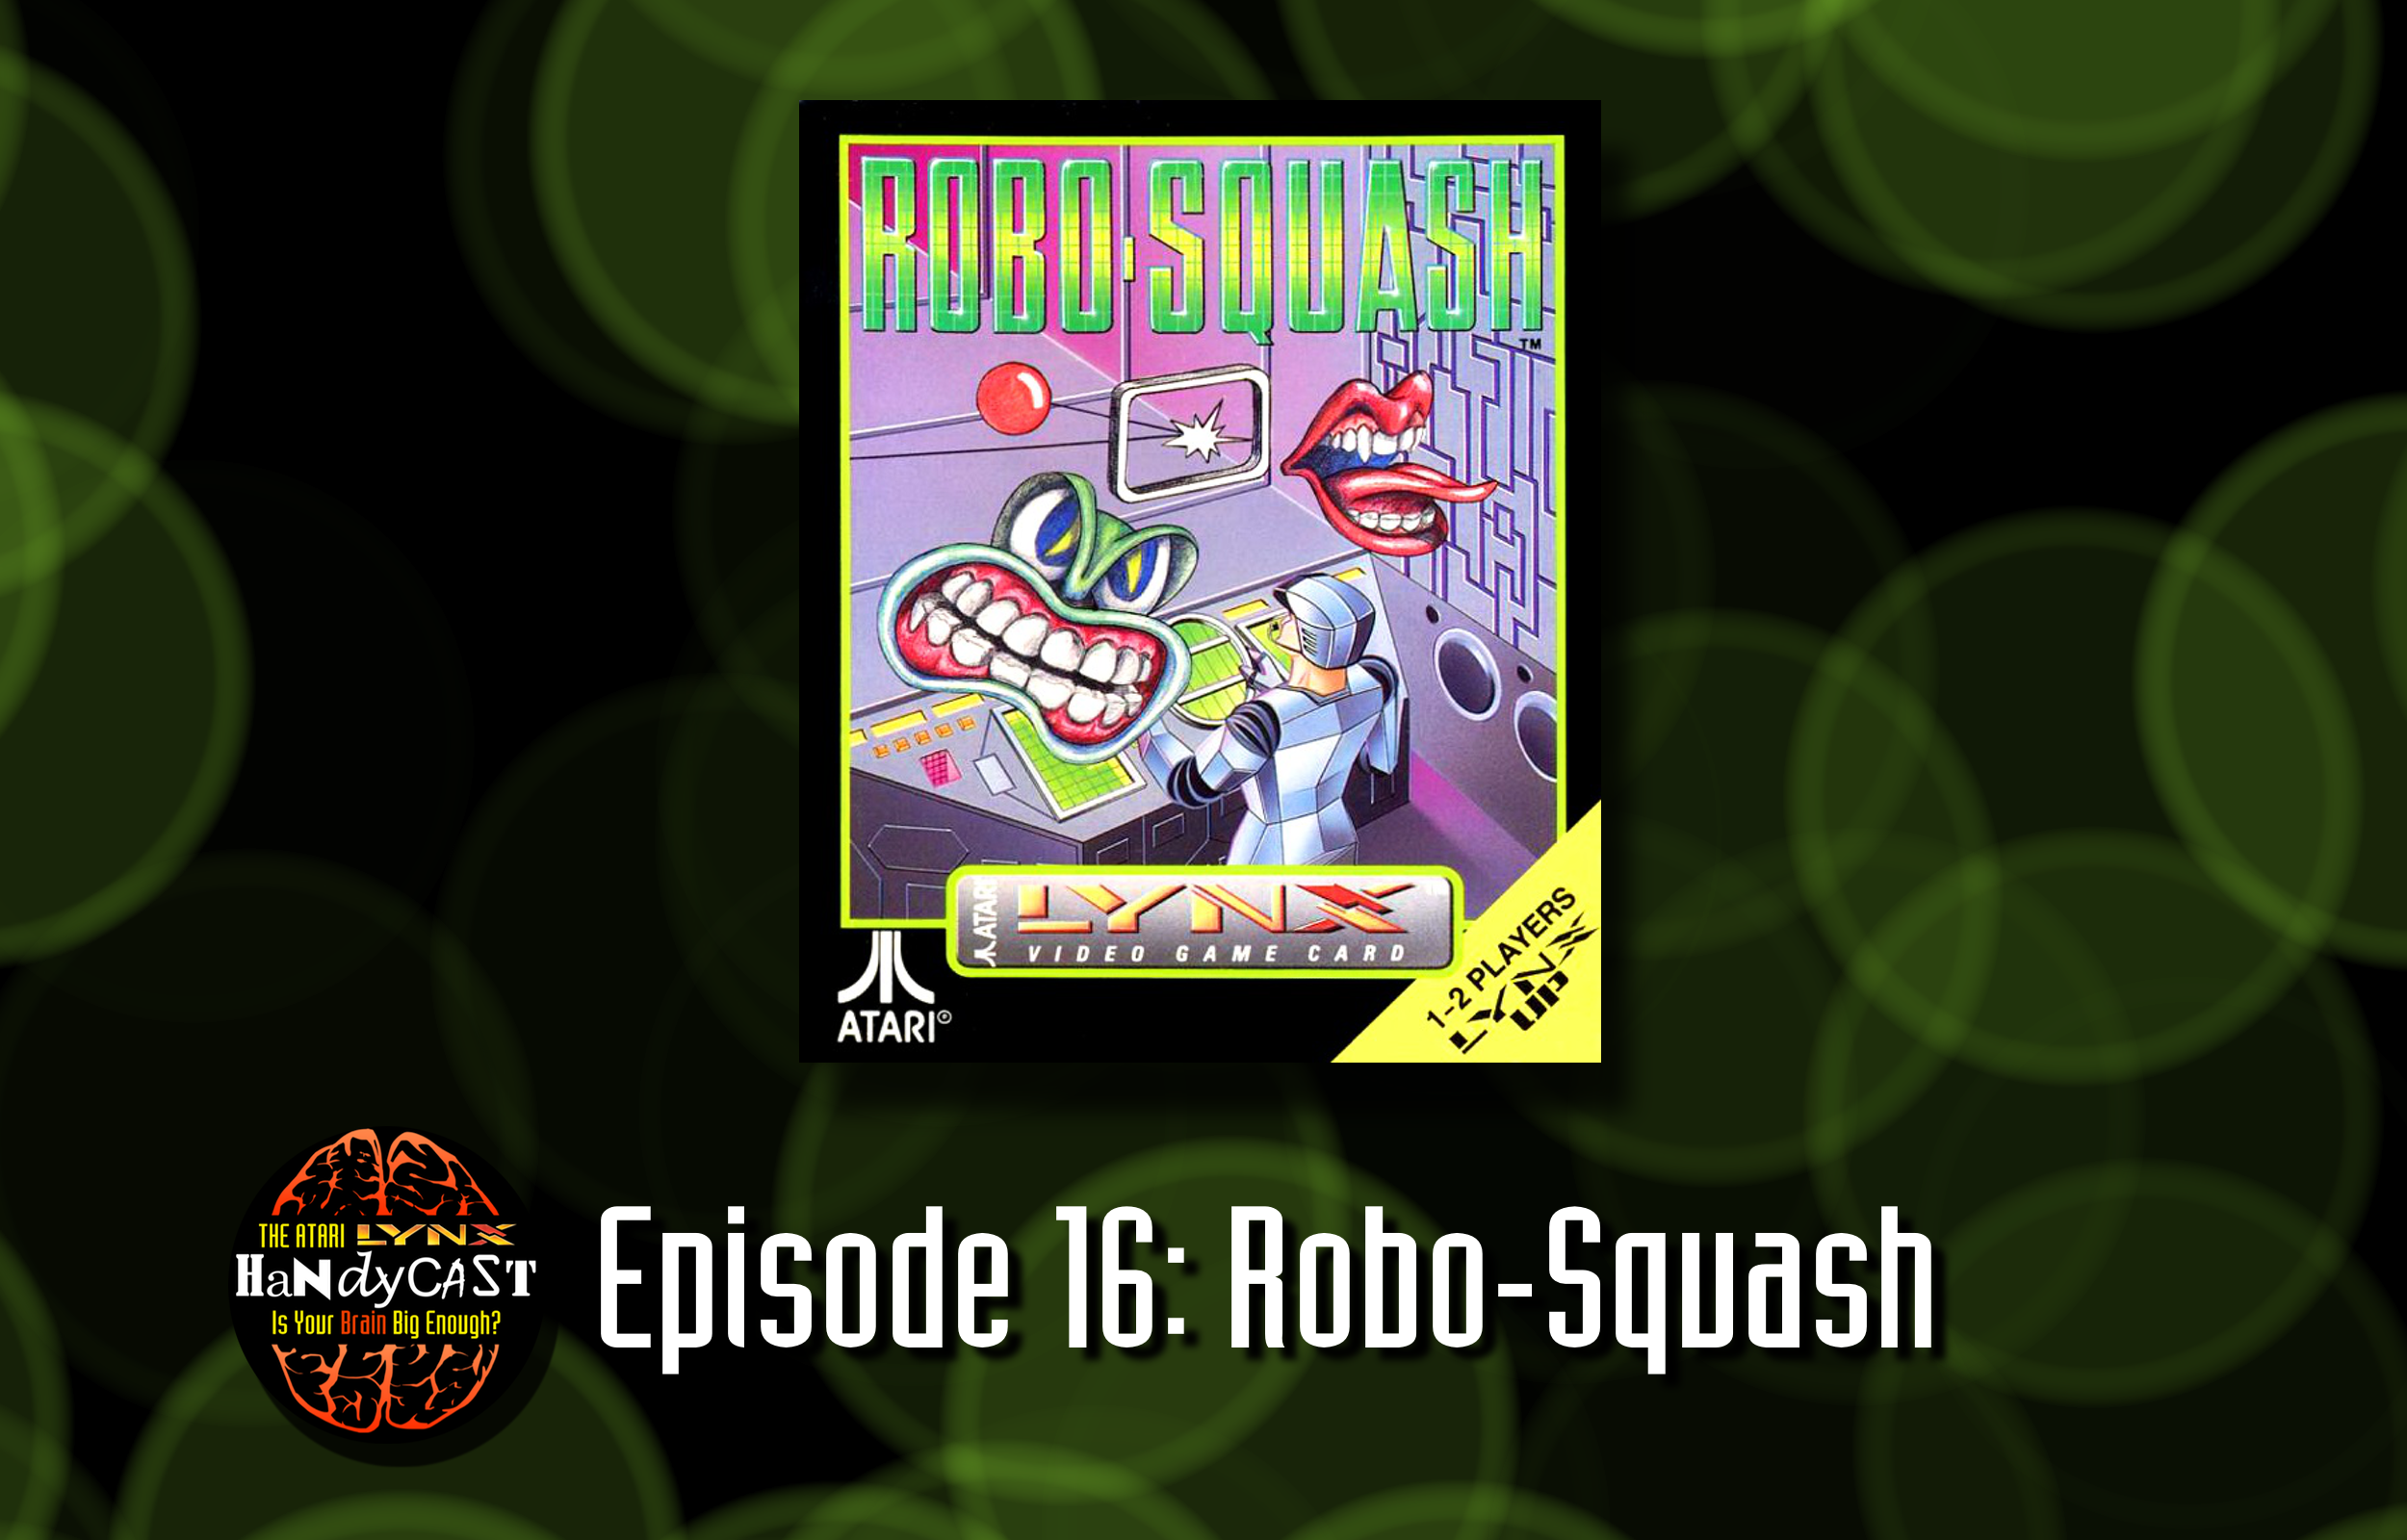 EPISODE 16: Robo-Squash - The Atari Lynx HandyCast